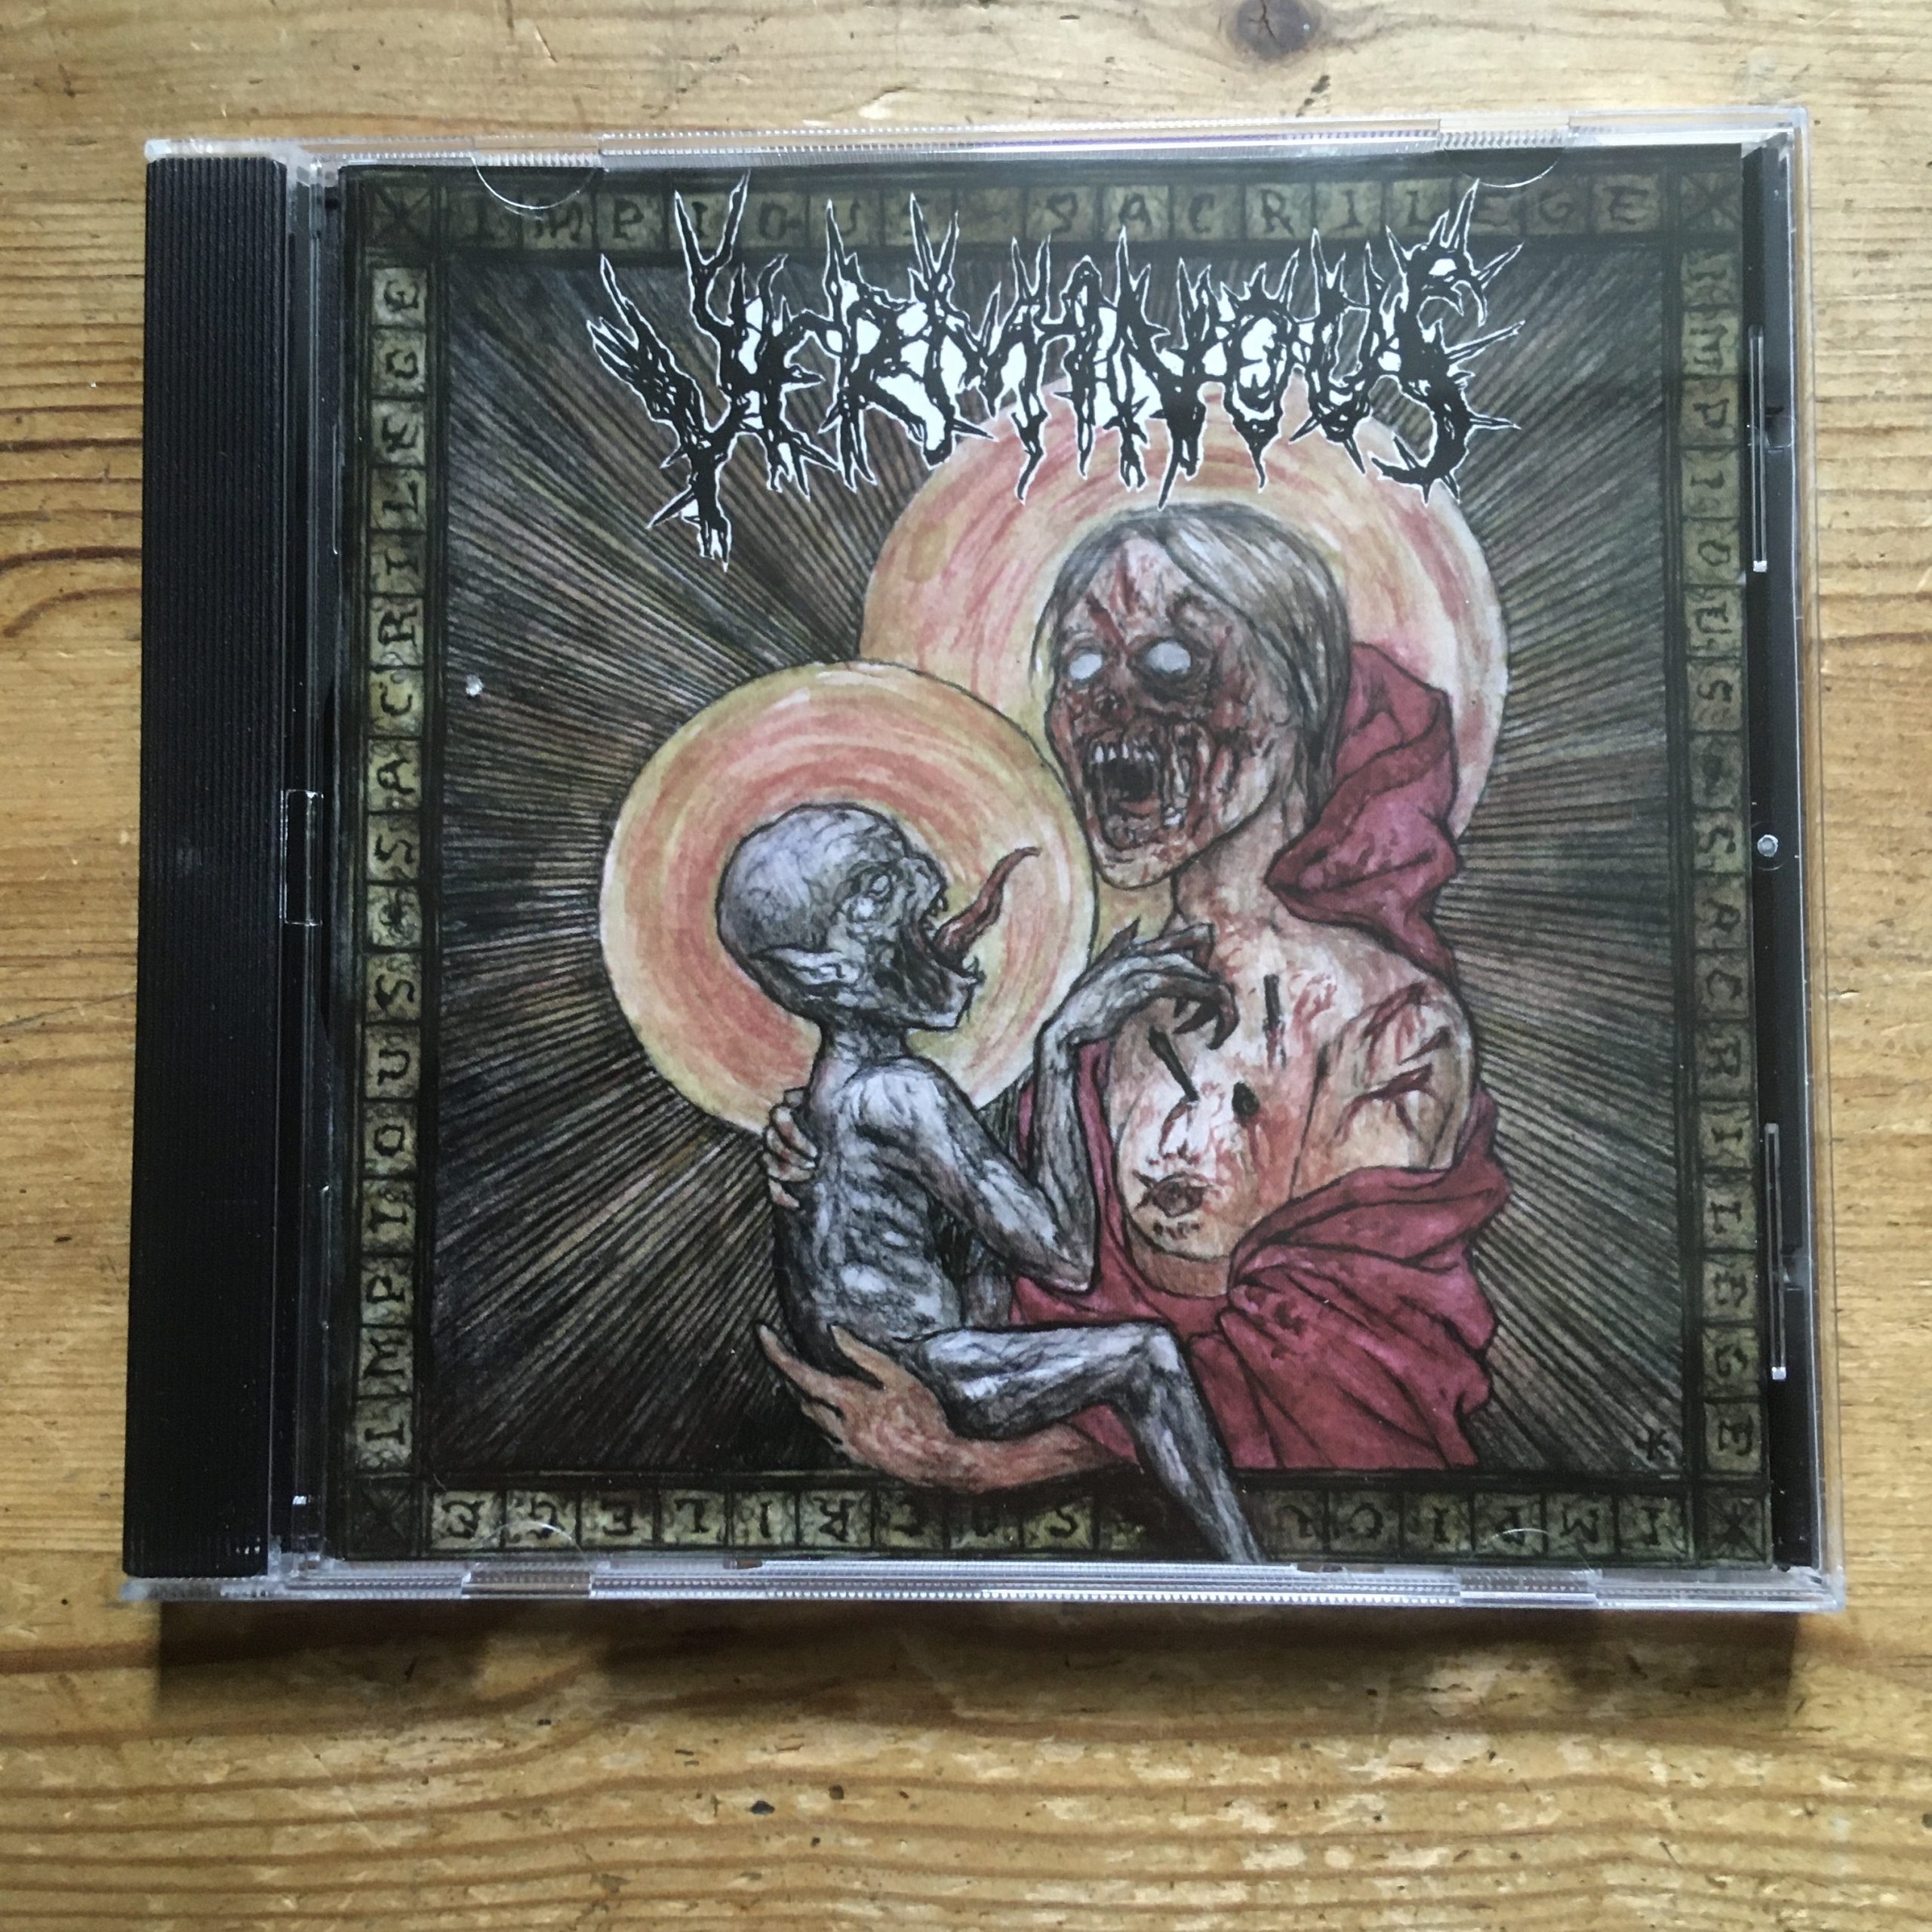 Photo of the Verminous - "Impious Sacrilege" CD